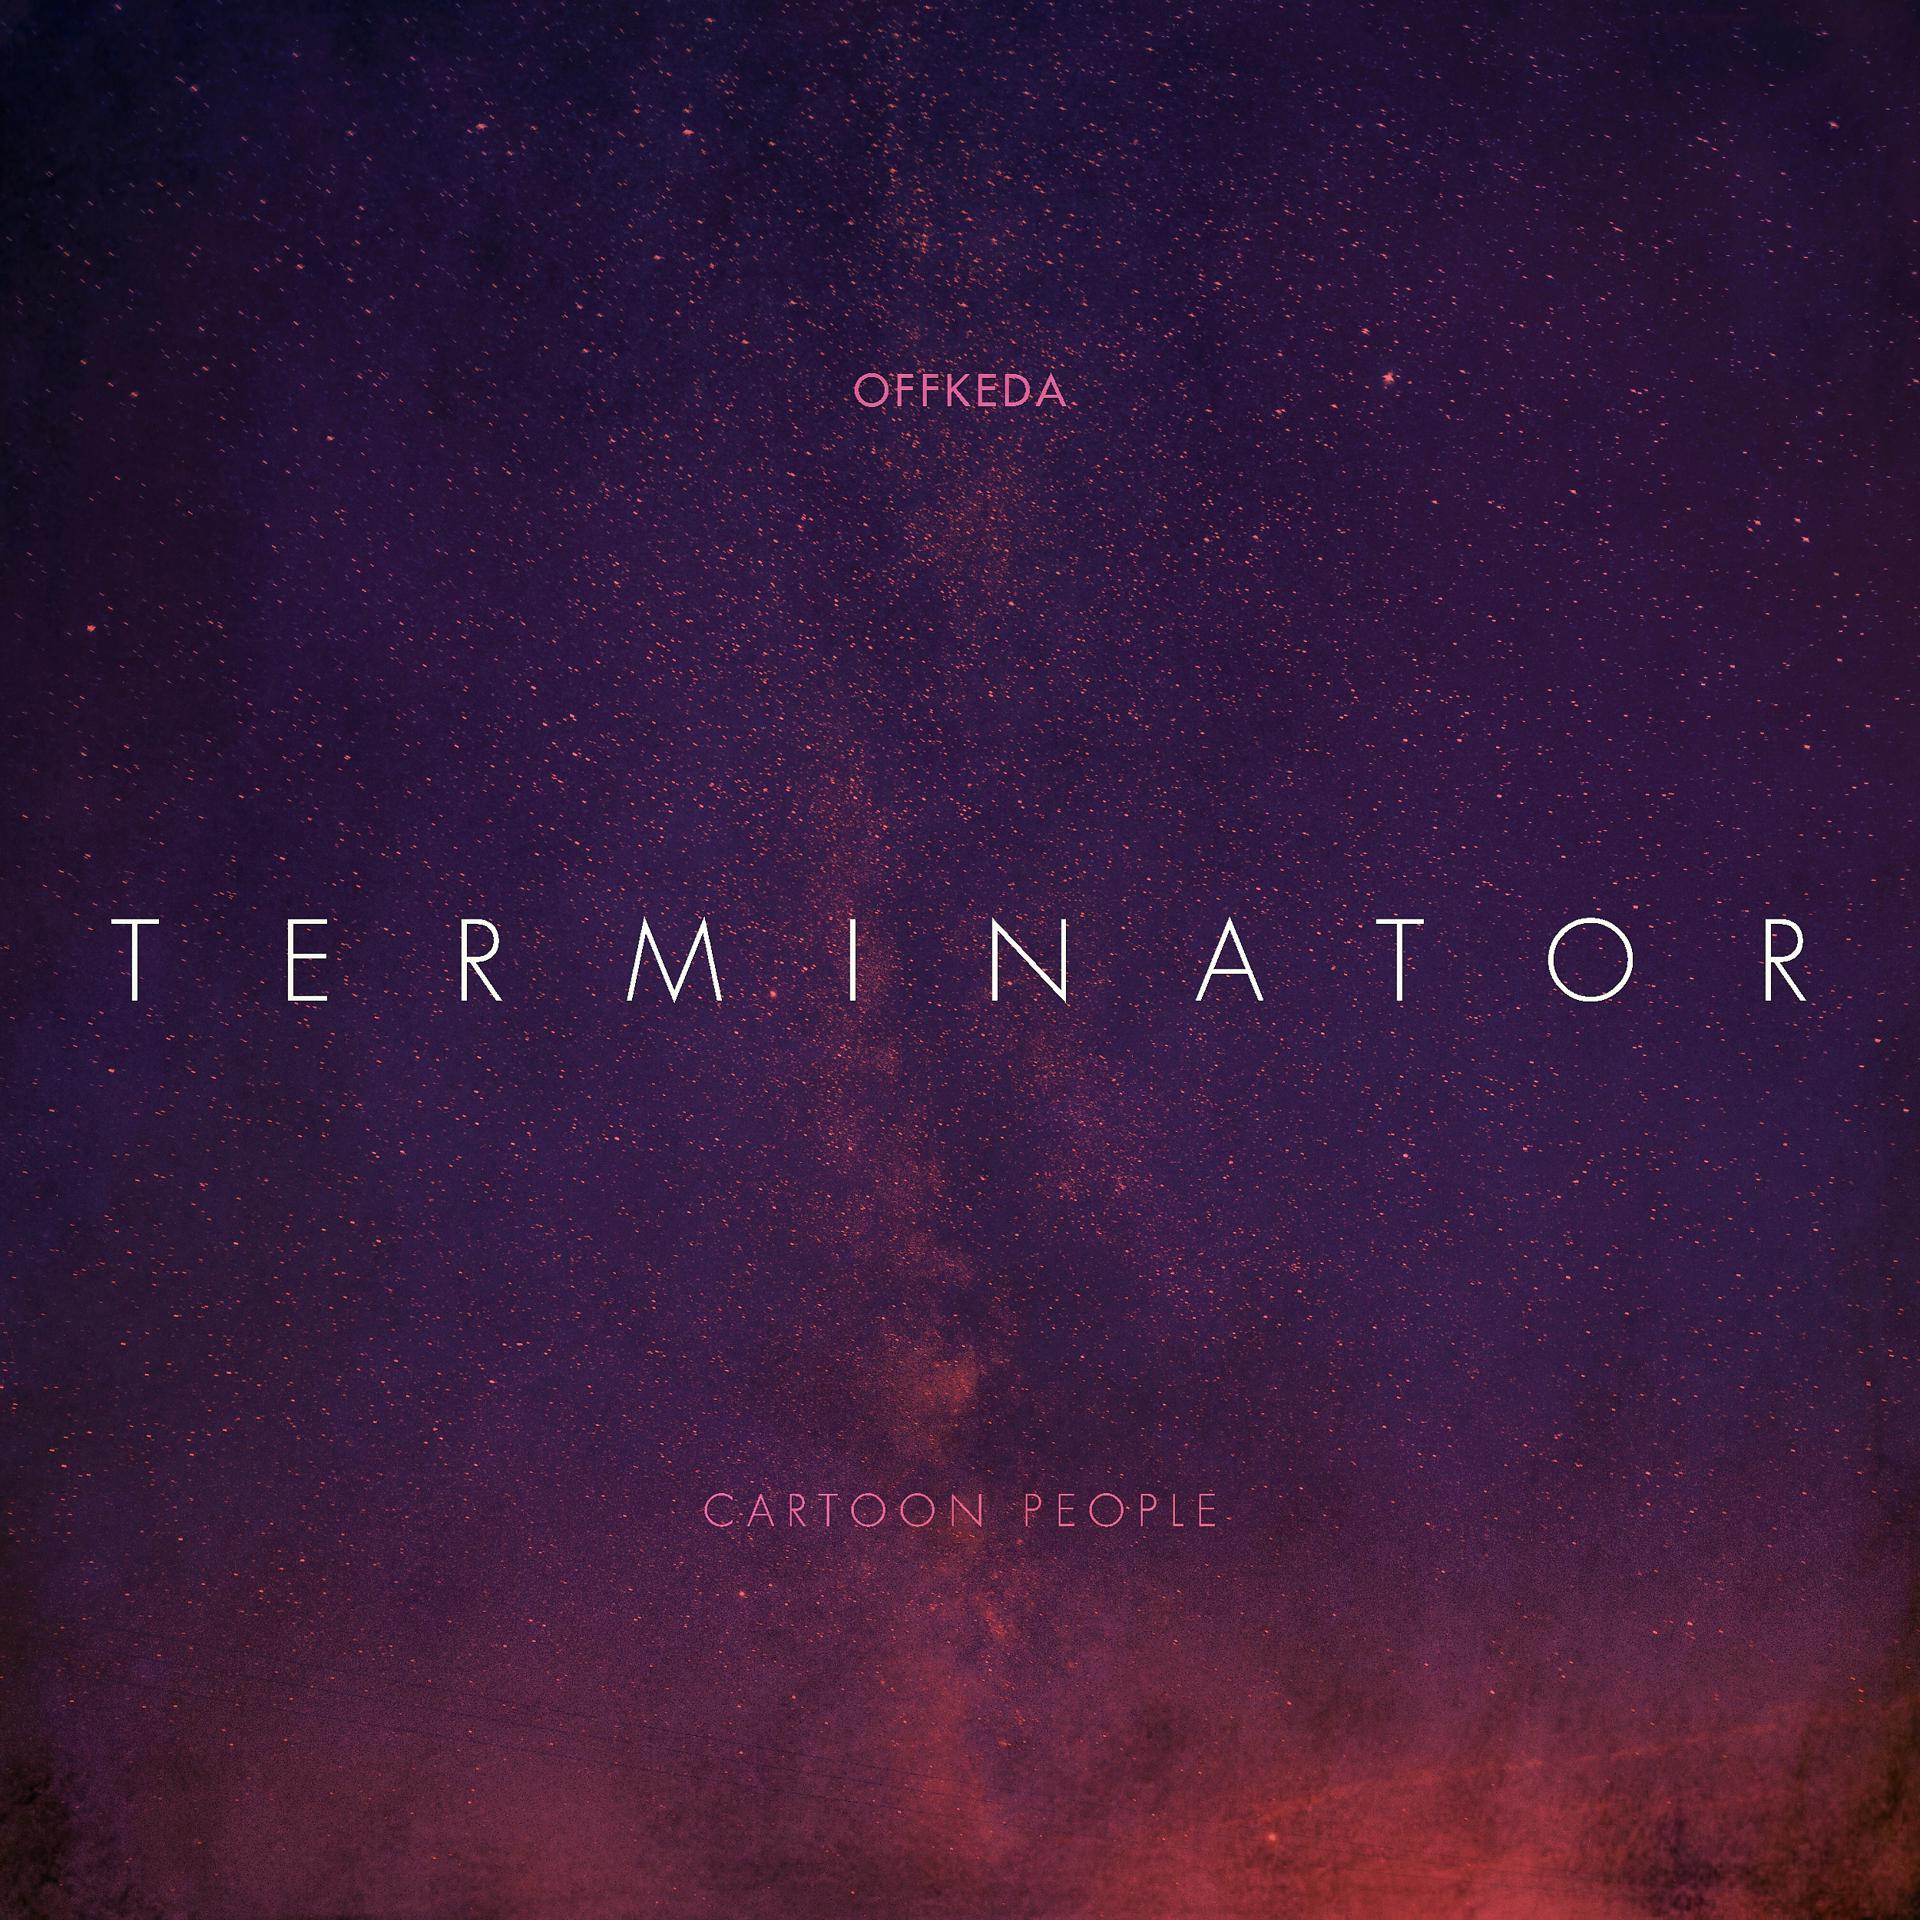 Постер к треку Offkeda - Terminator